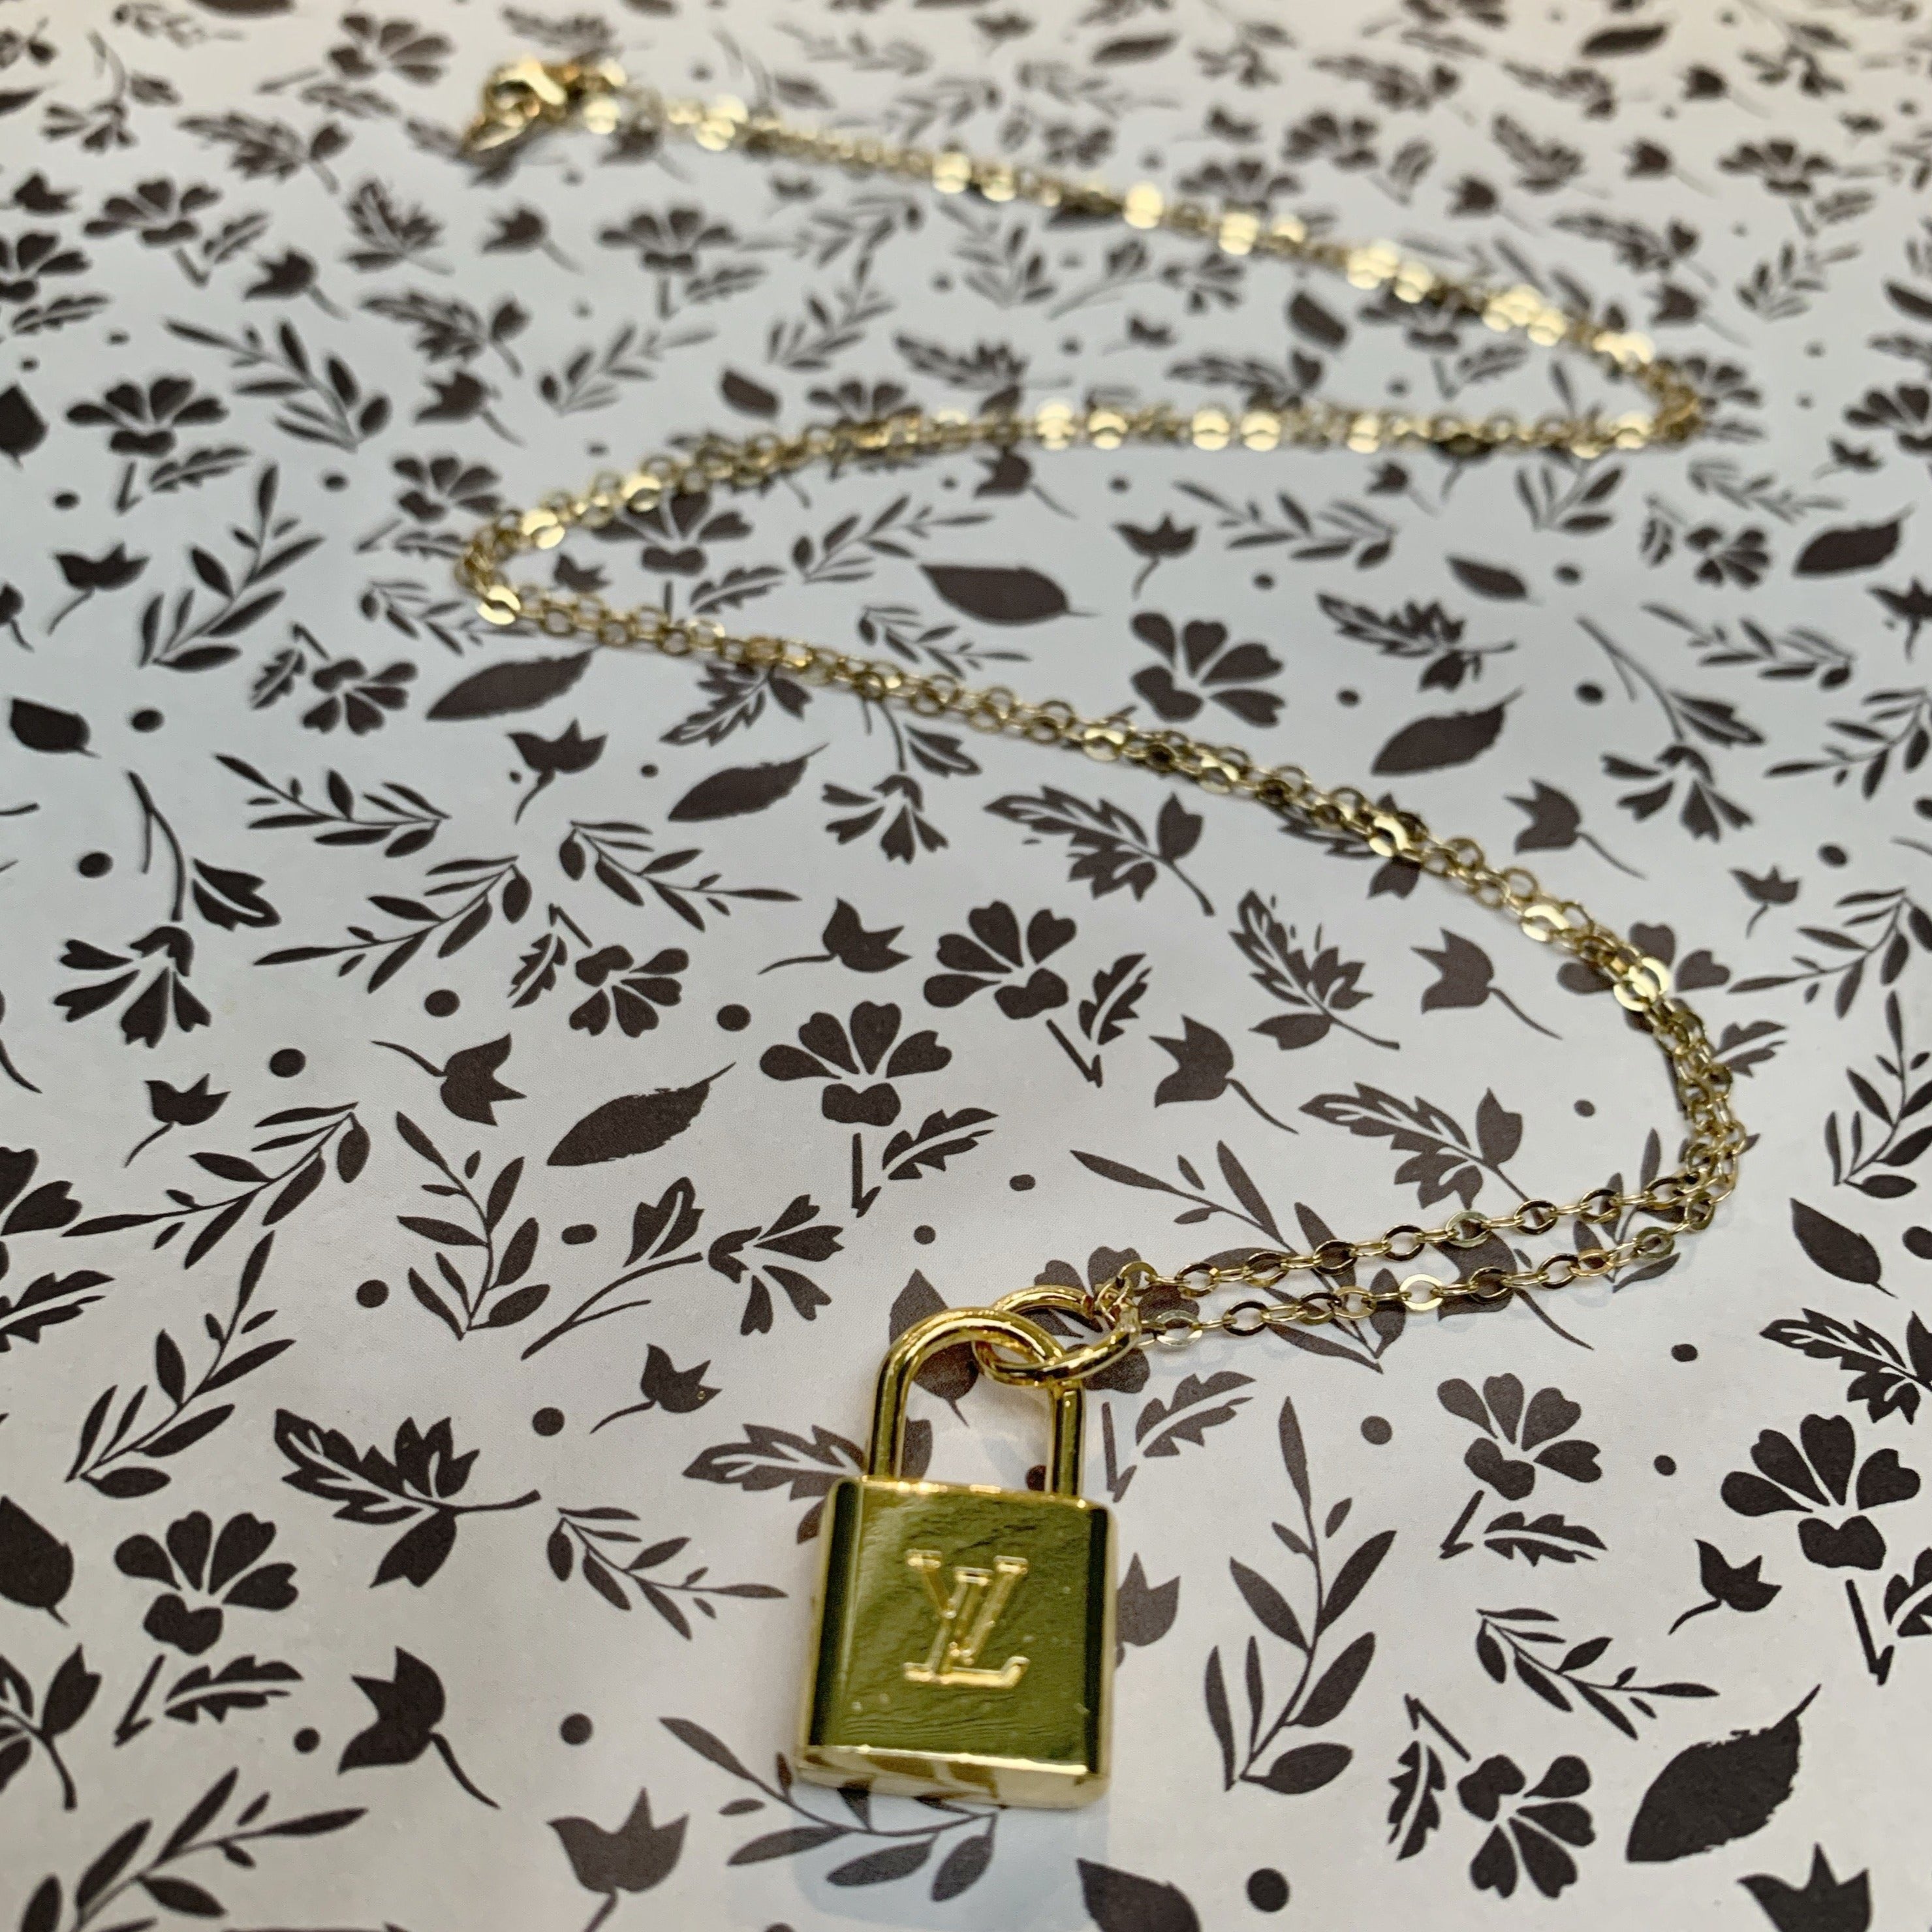 Gold LV Lock Necklace – Vintage Vogue Lux